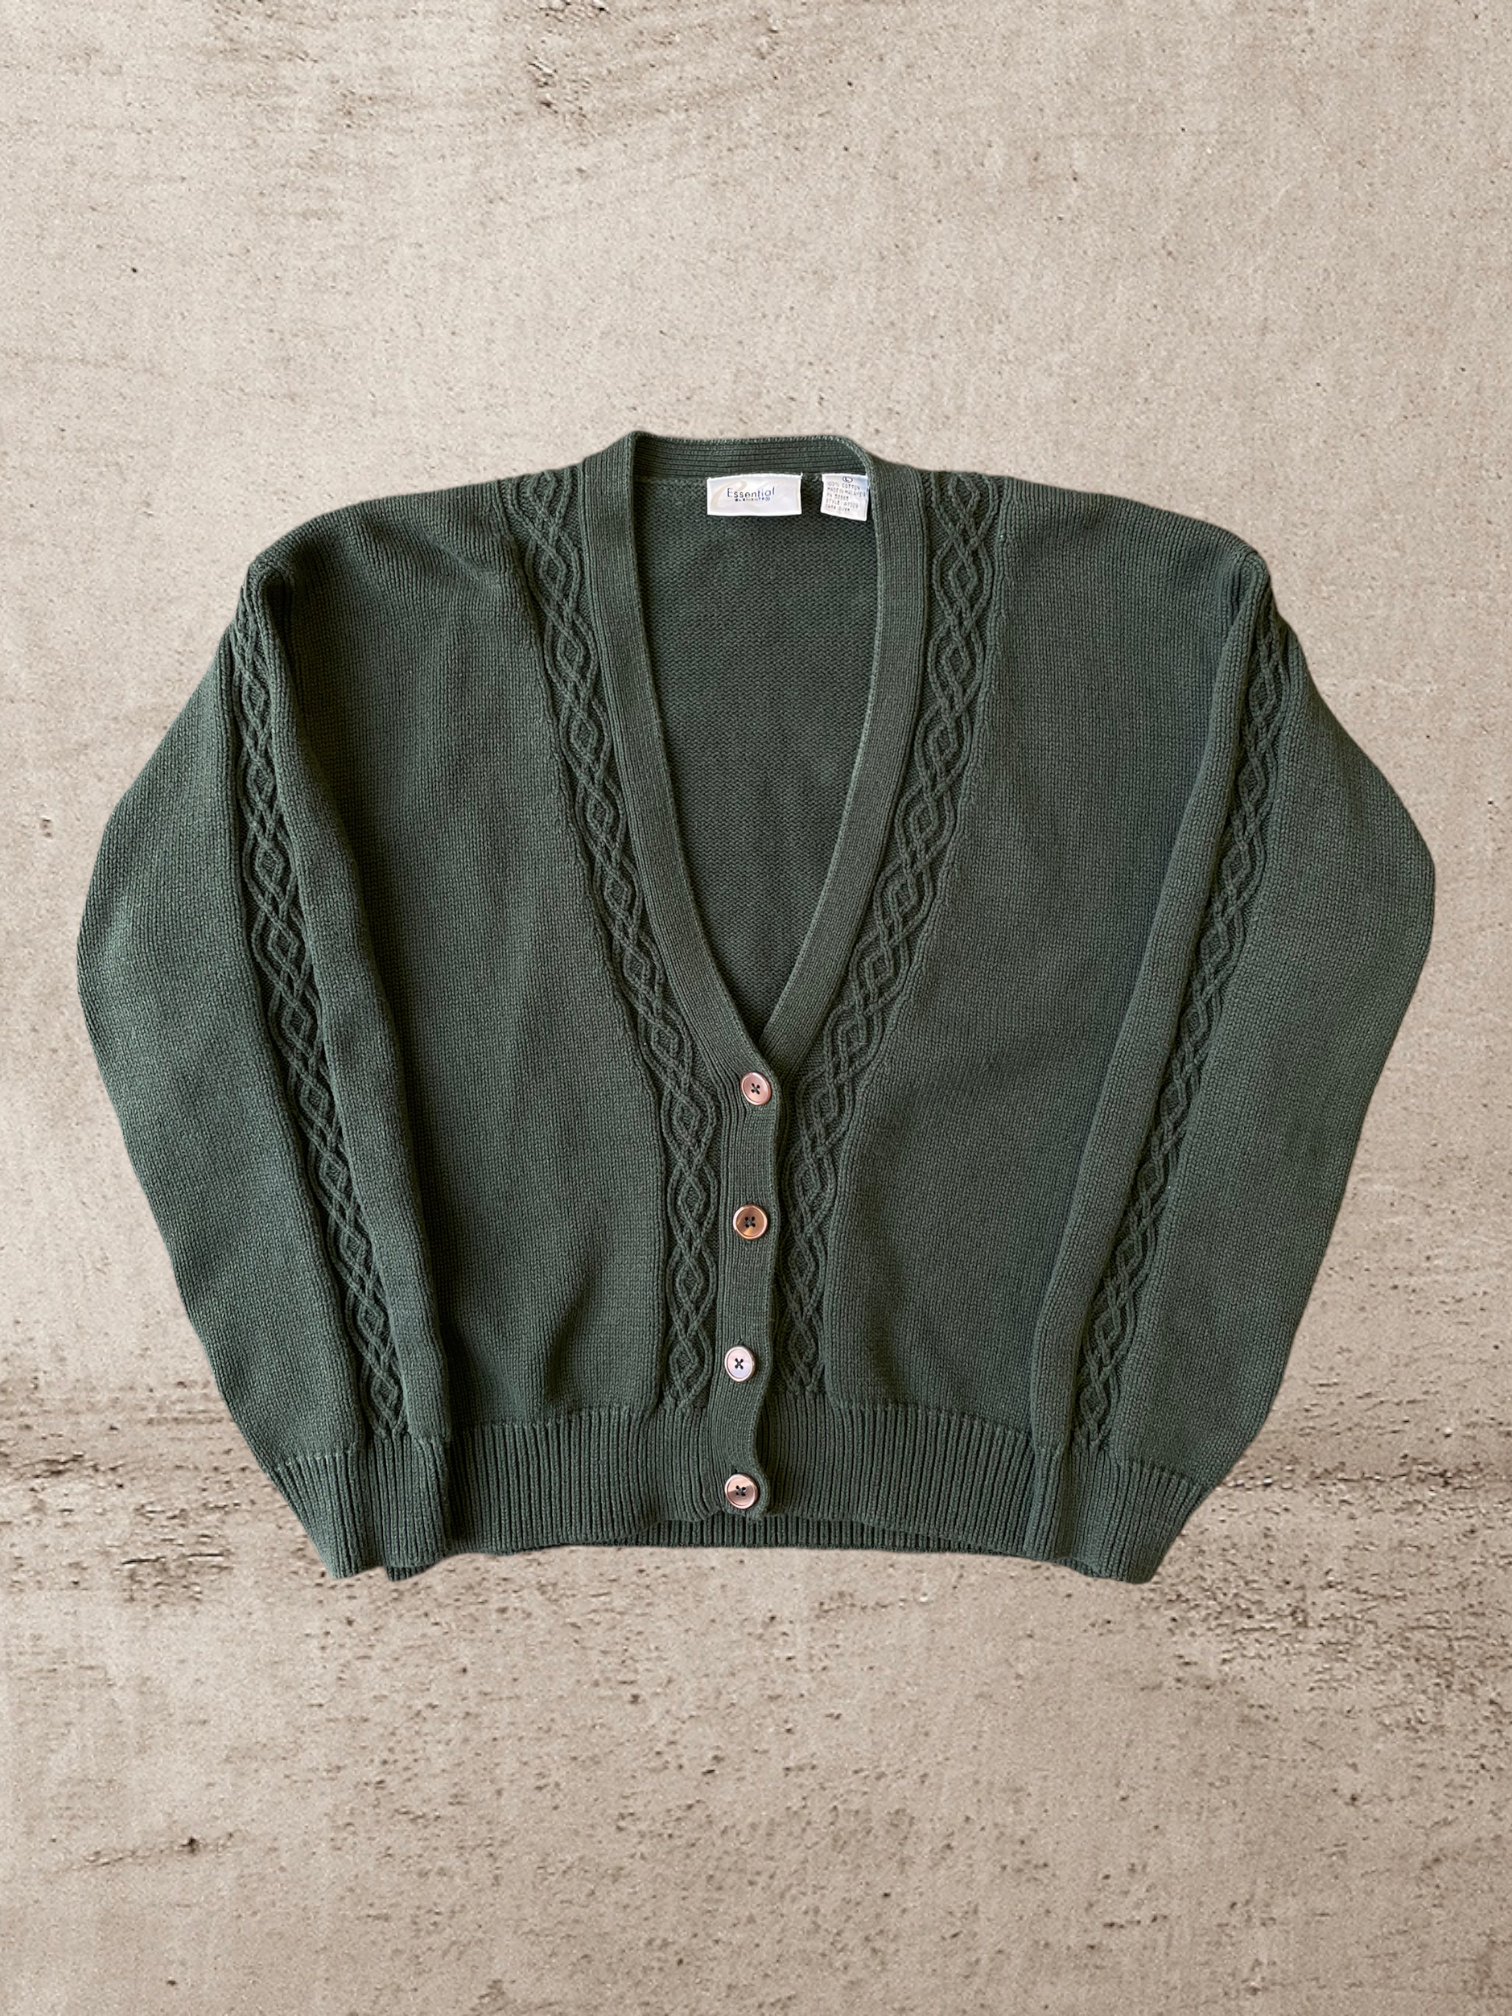 Vintage Green Cardigan - Medium